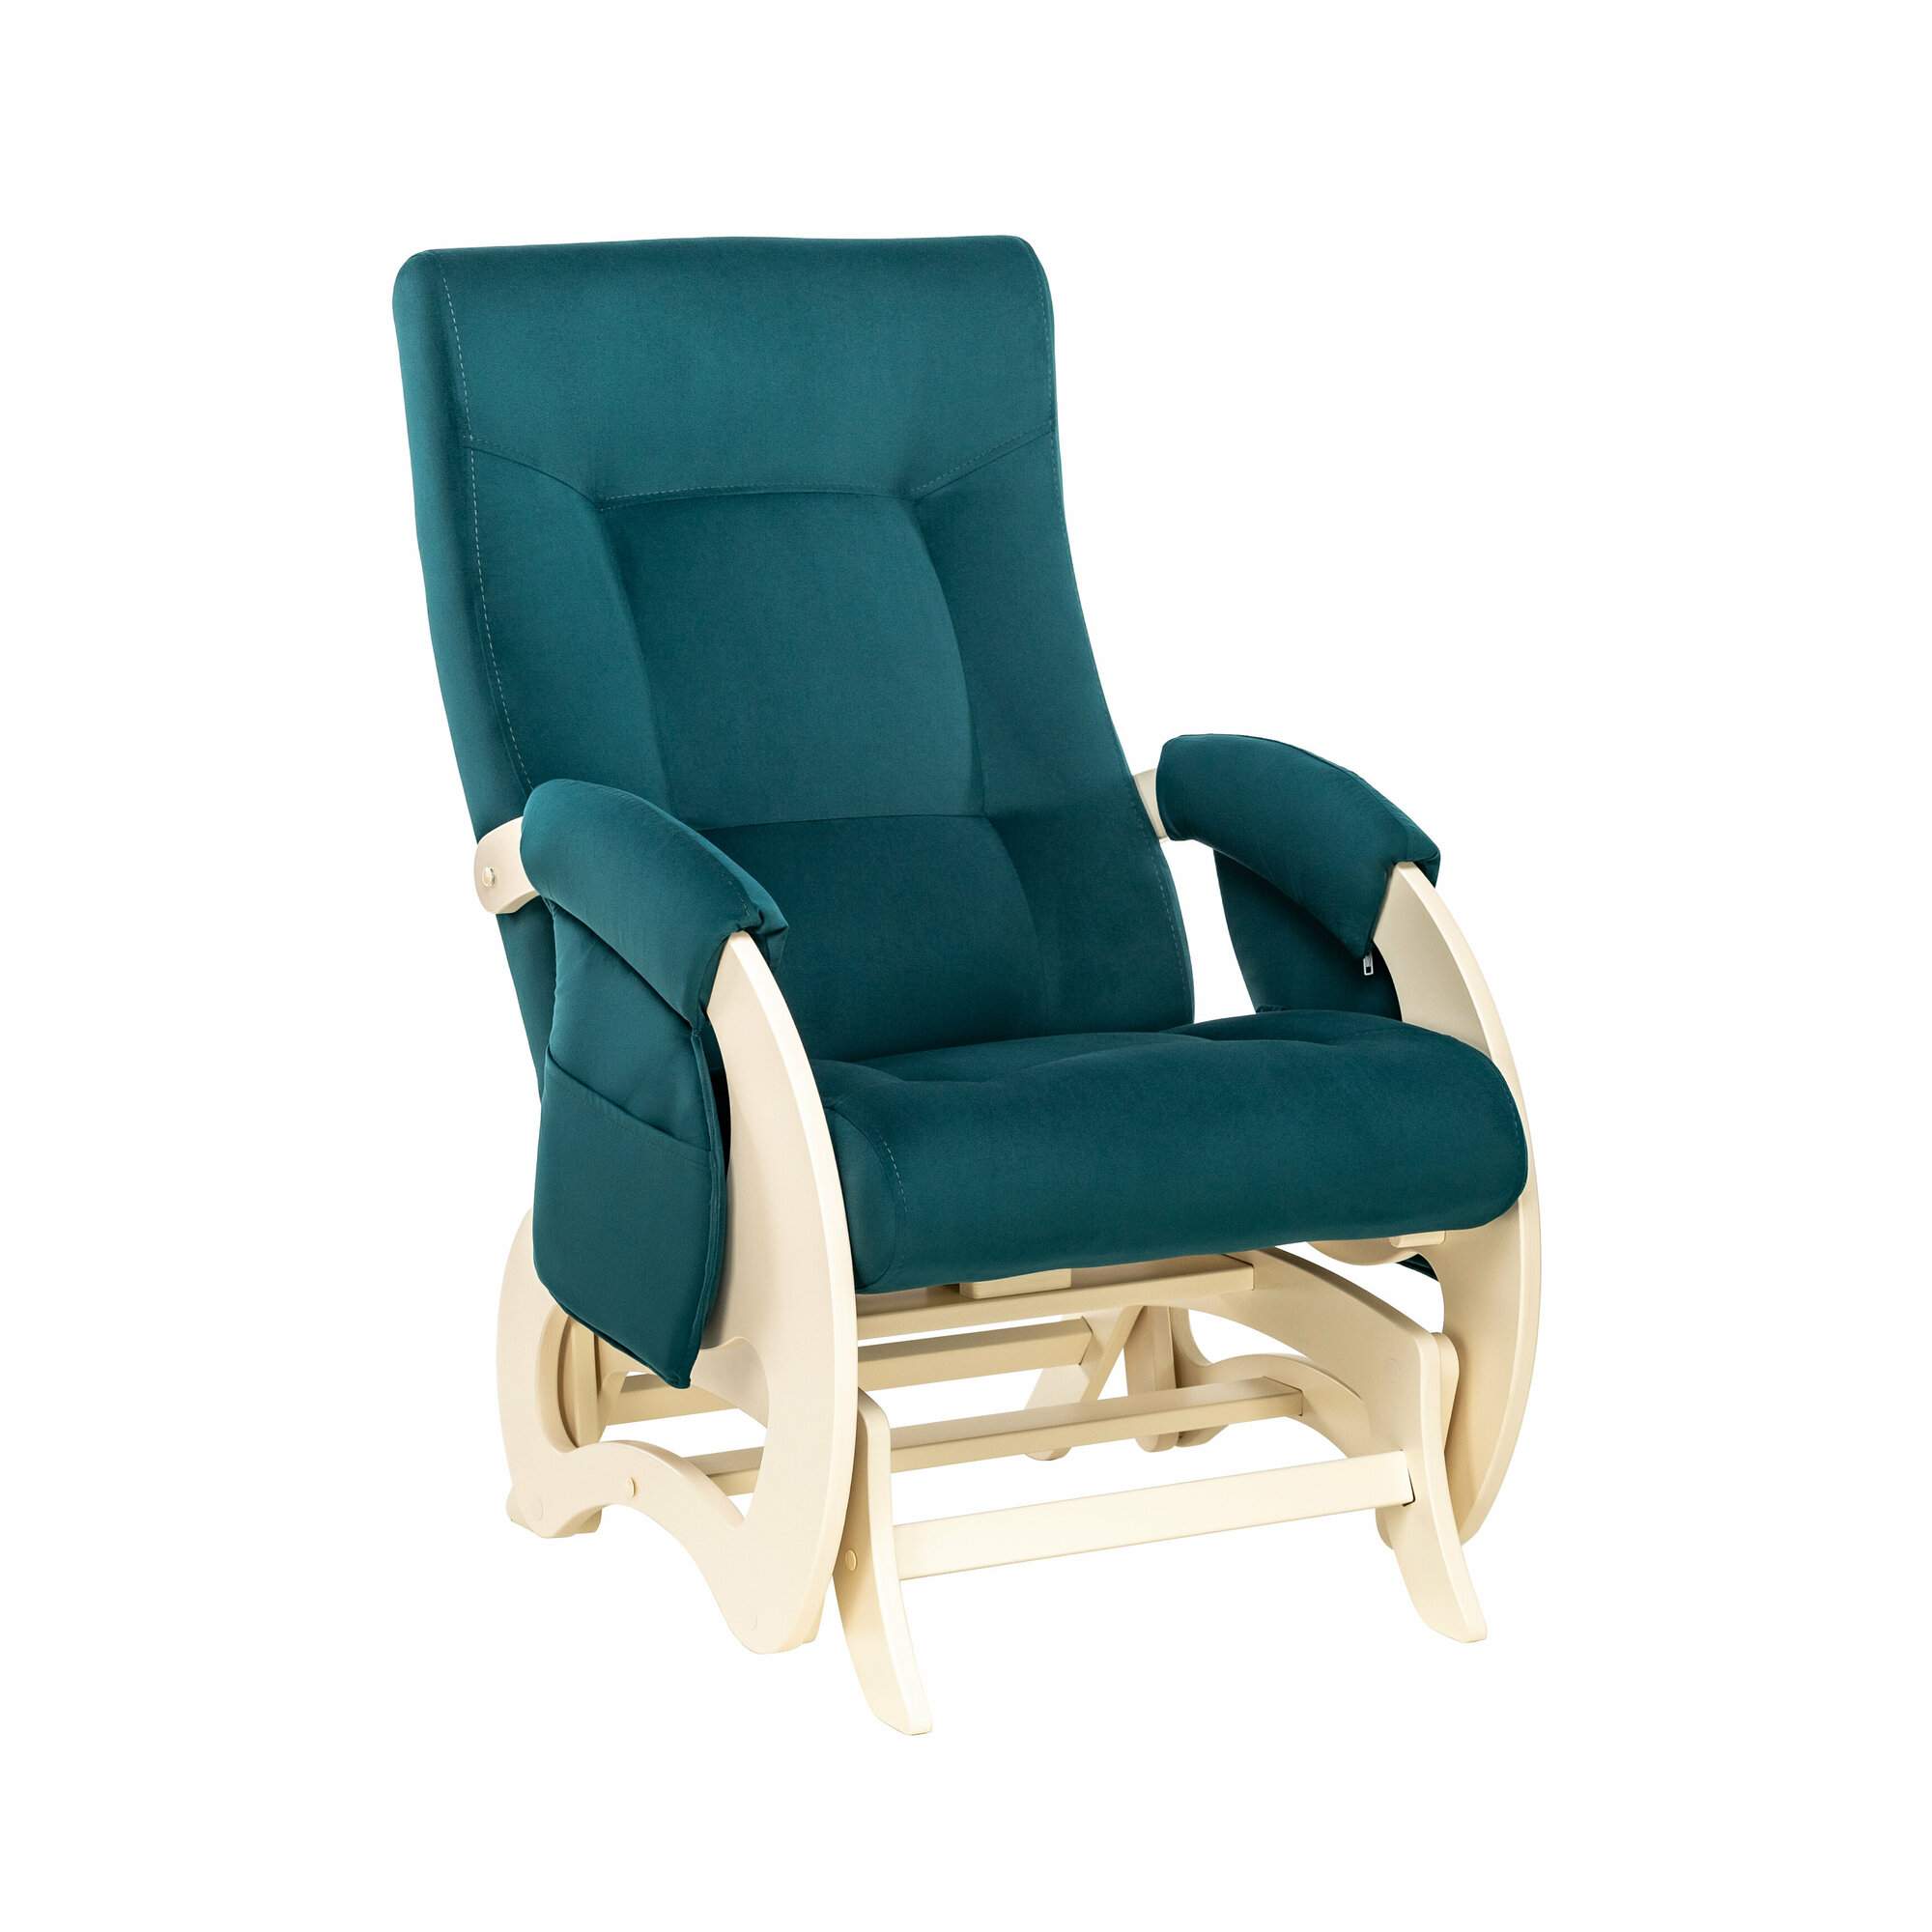 Кресло-глайдер для мамы (для кормления) Milli Ария Дуб шампань/V20